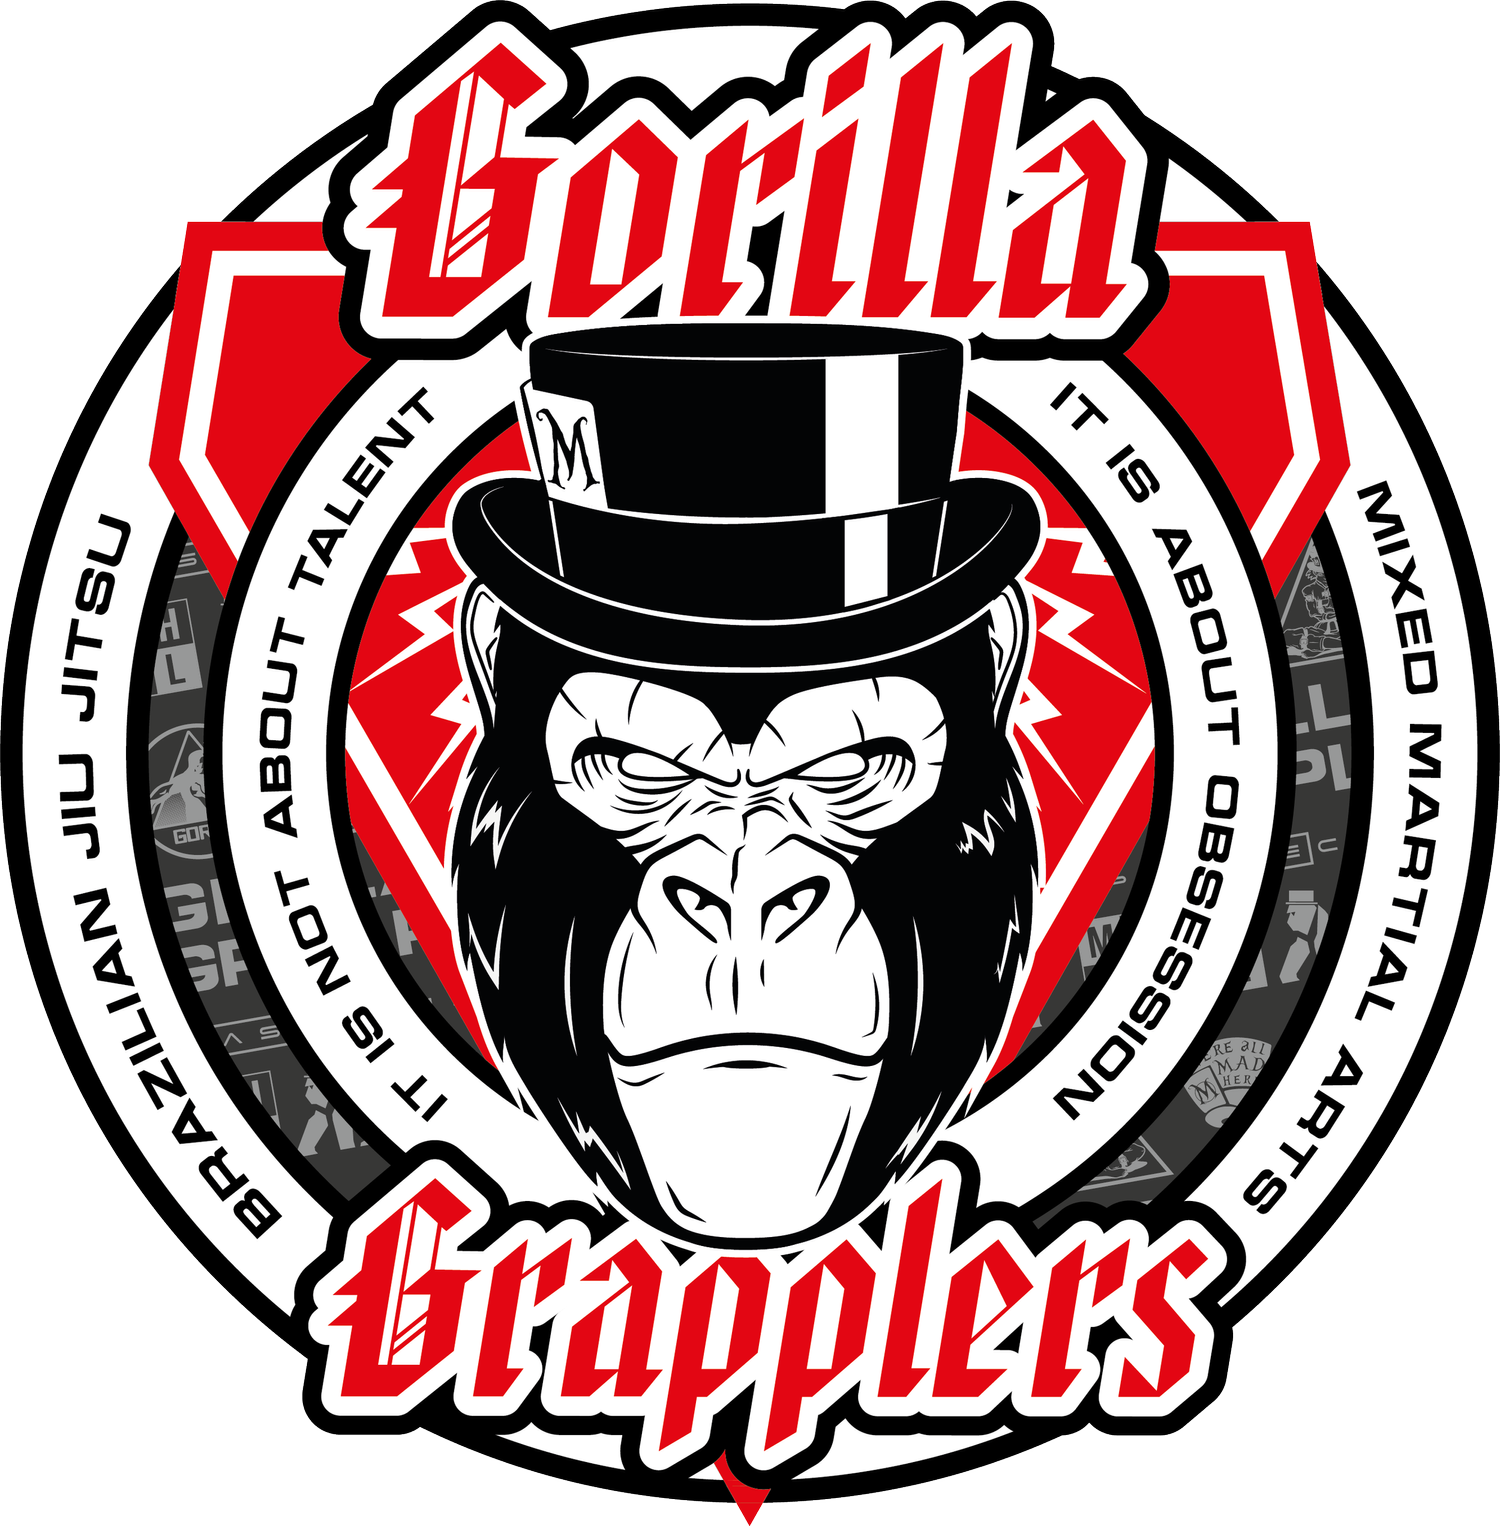 Gorilla Grapplers